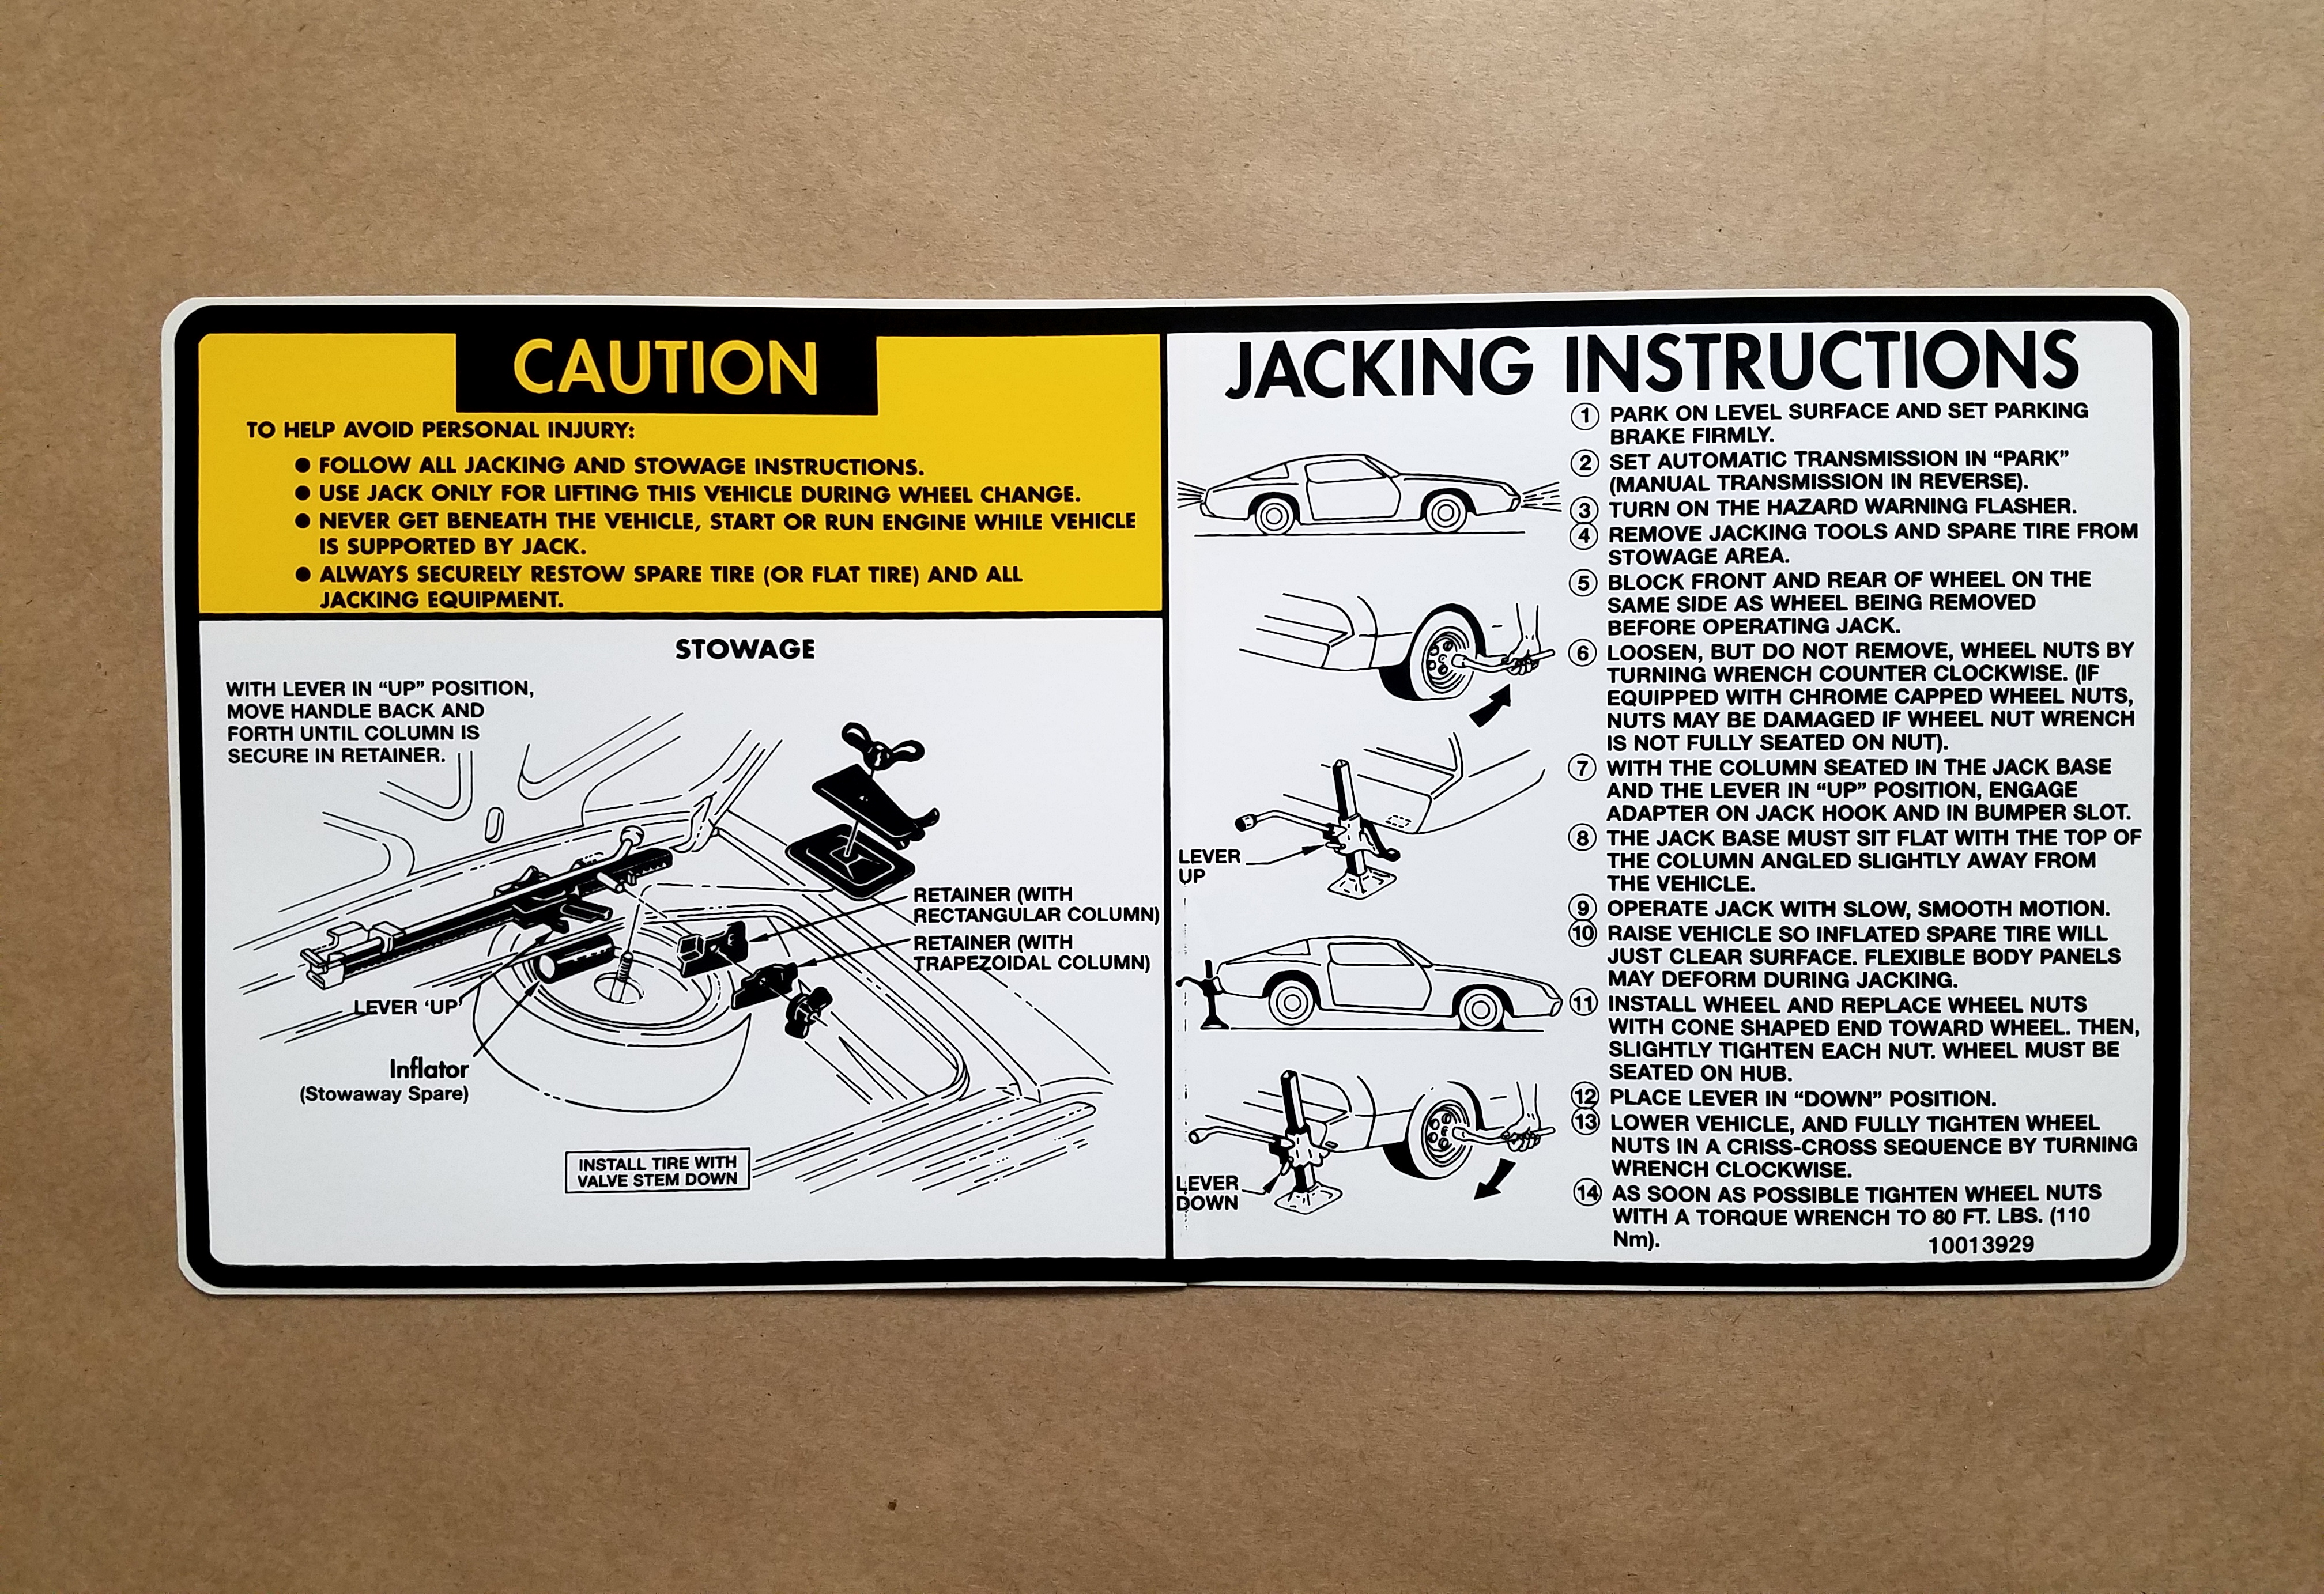 1980 Firebird Jack Instructions, Space Saver Spare Tire, GM# 10013929, 1980 Trans Am